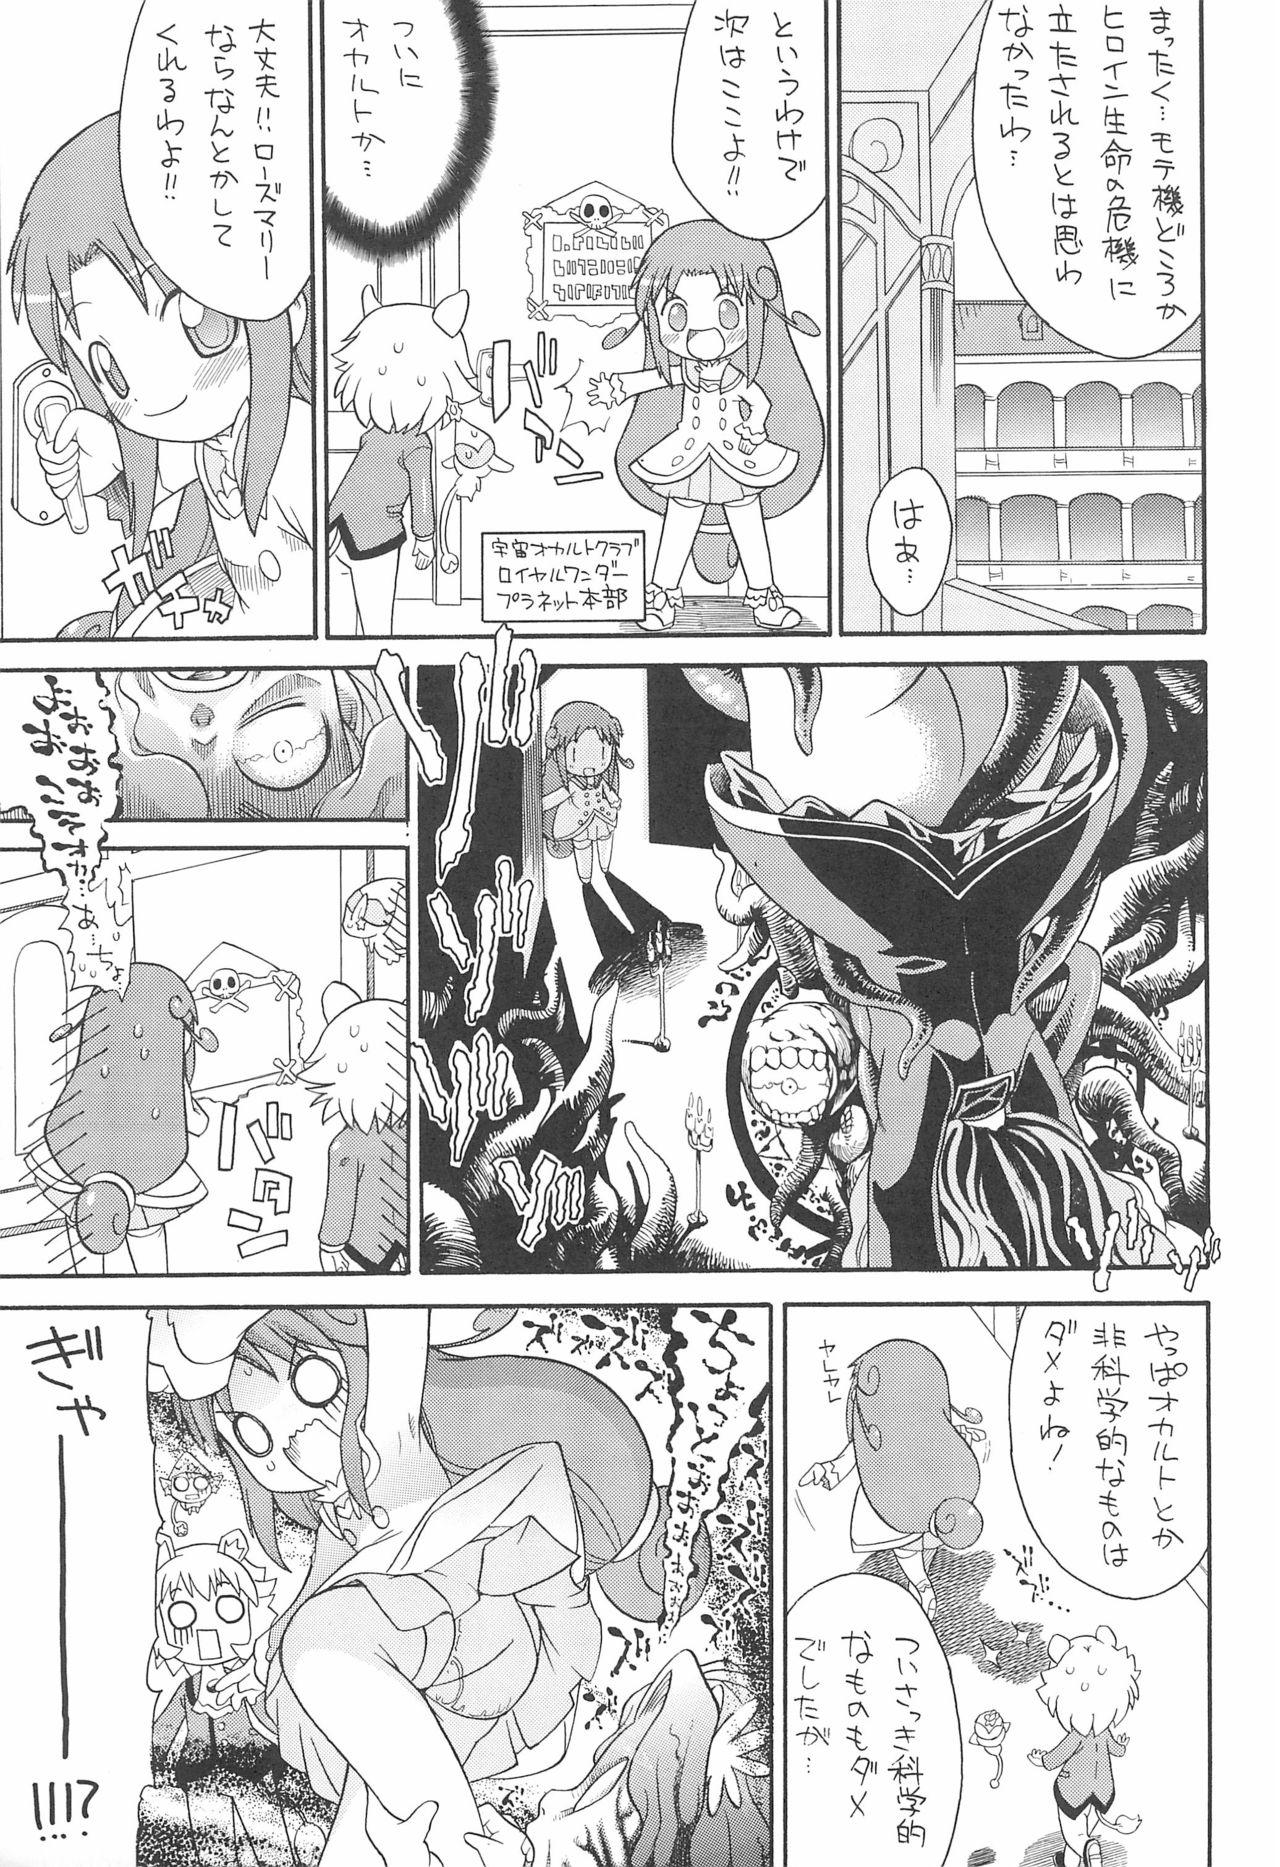 Star Kodomo ja Neenda Princess nanda! 4 - Fushigiboshi no futagohime | twin princesses of the wonder planet Pete - Page 11